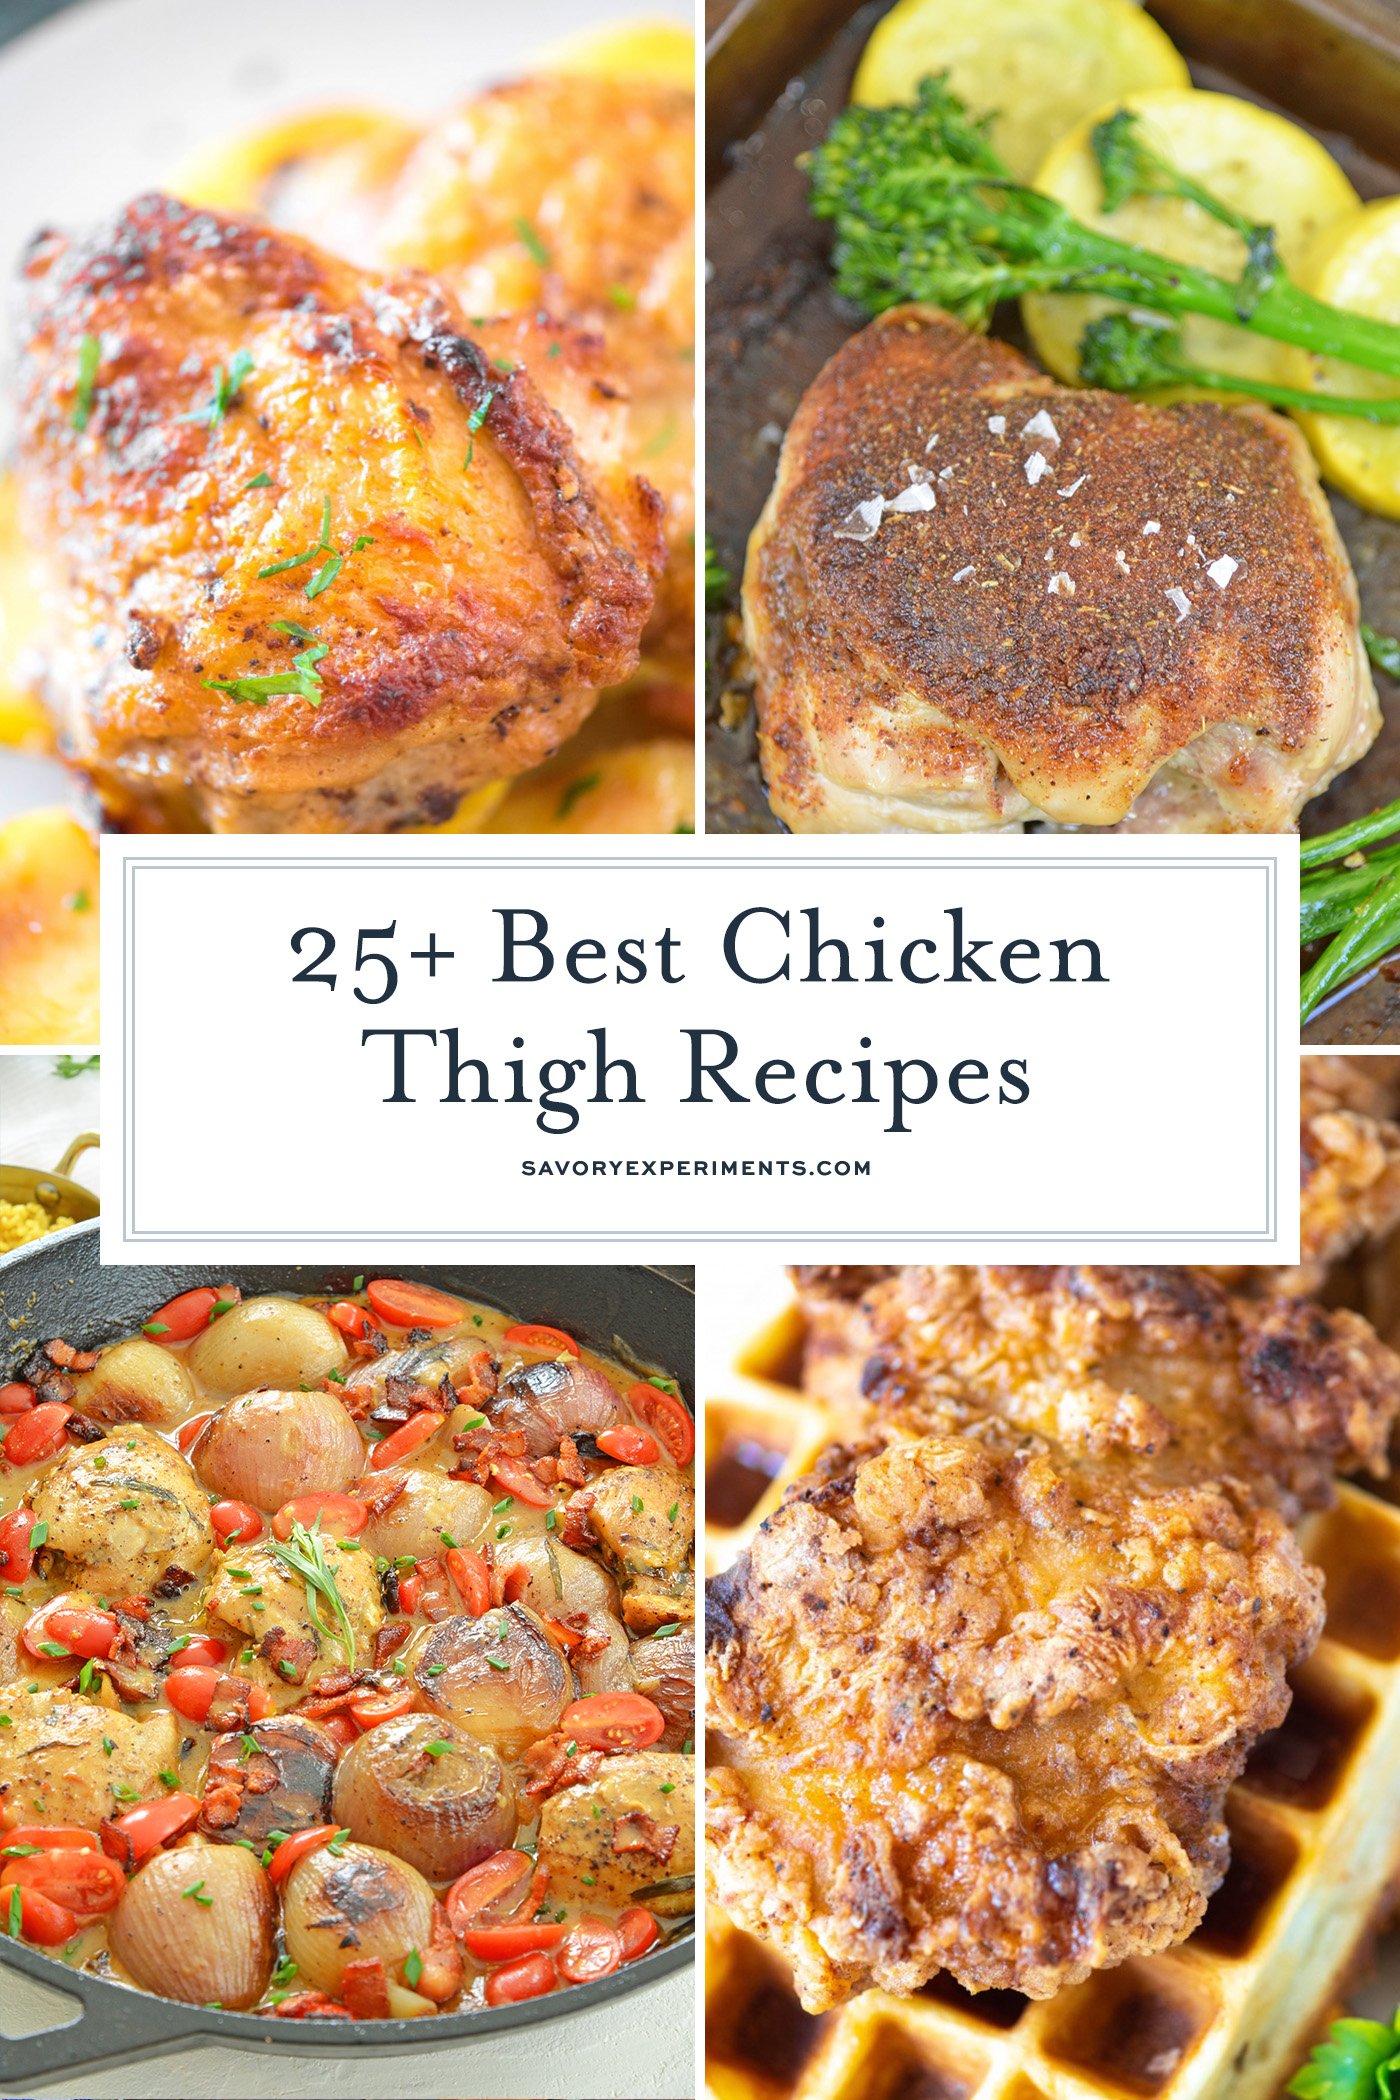 27+ Chicken And Sausage Crock Pot Recipes